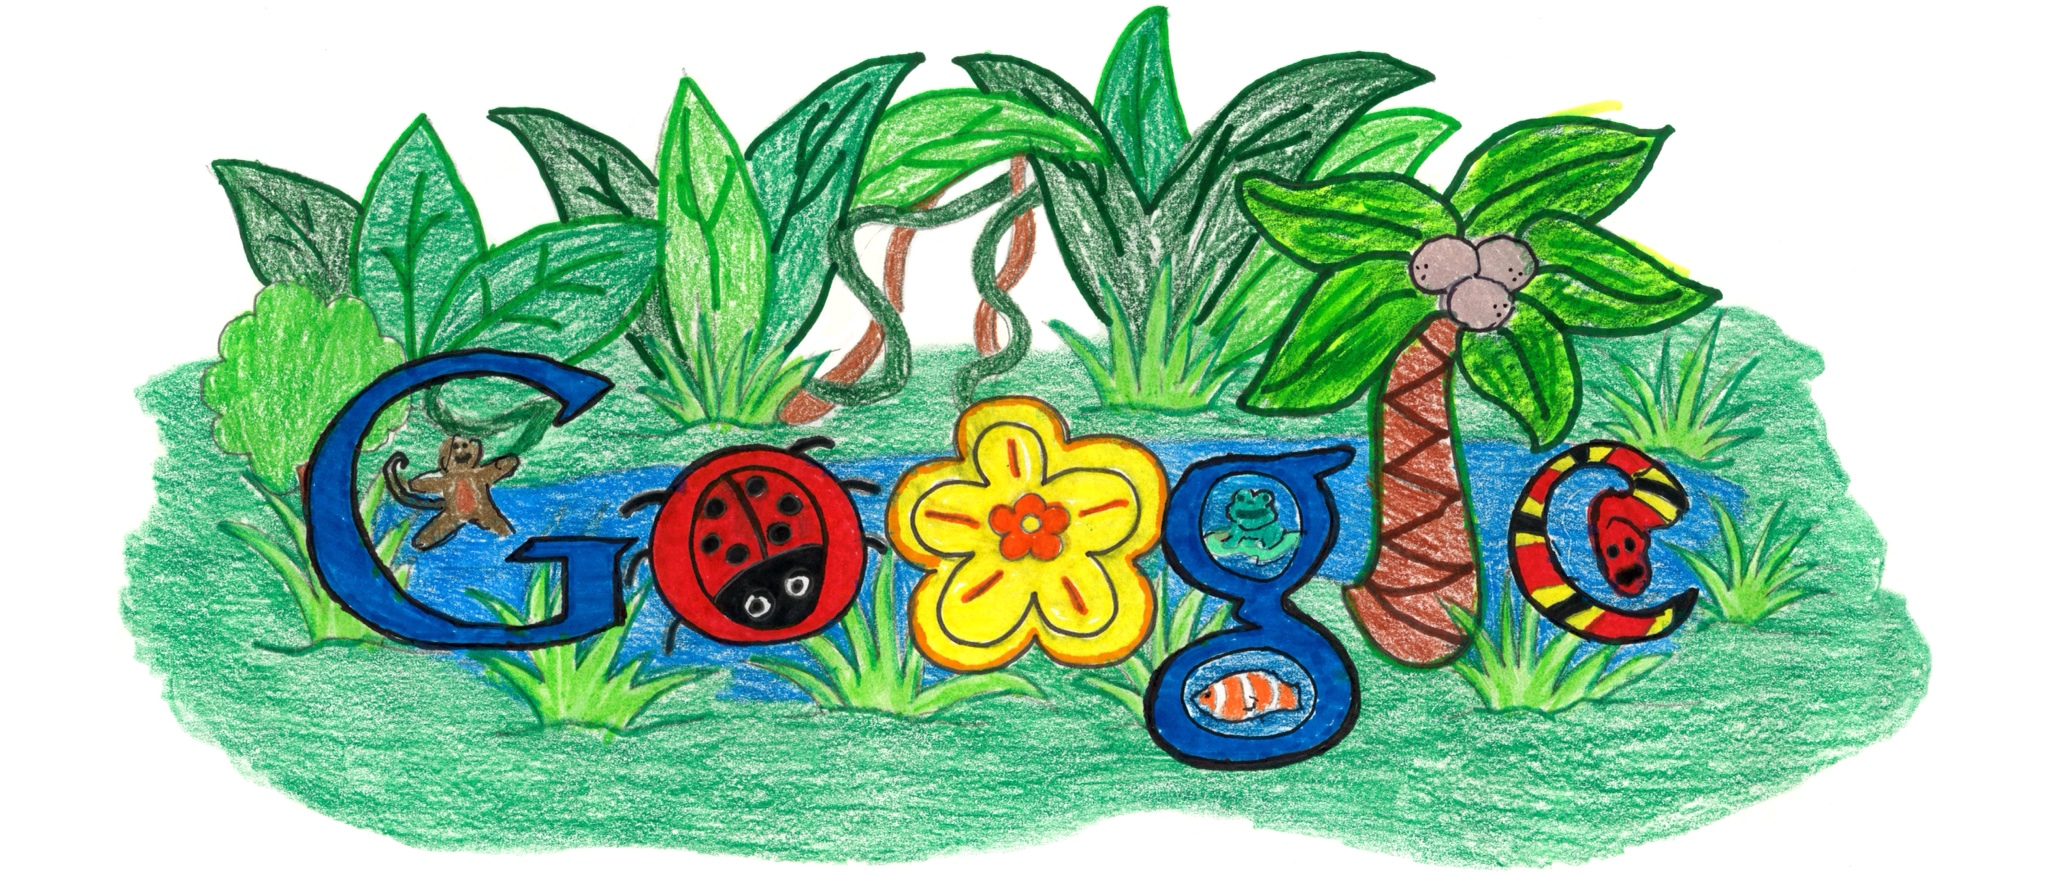 Doodle 4 Google 2010